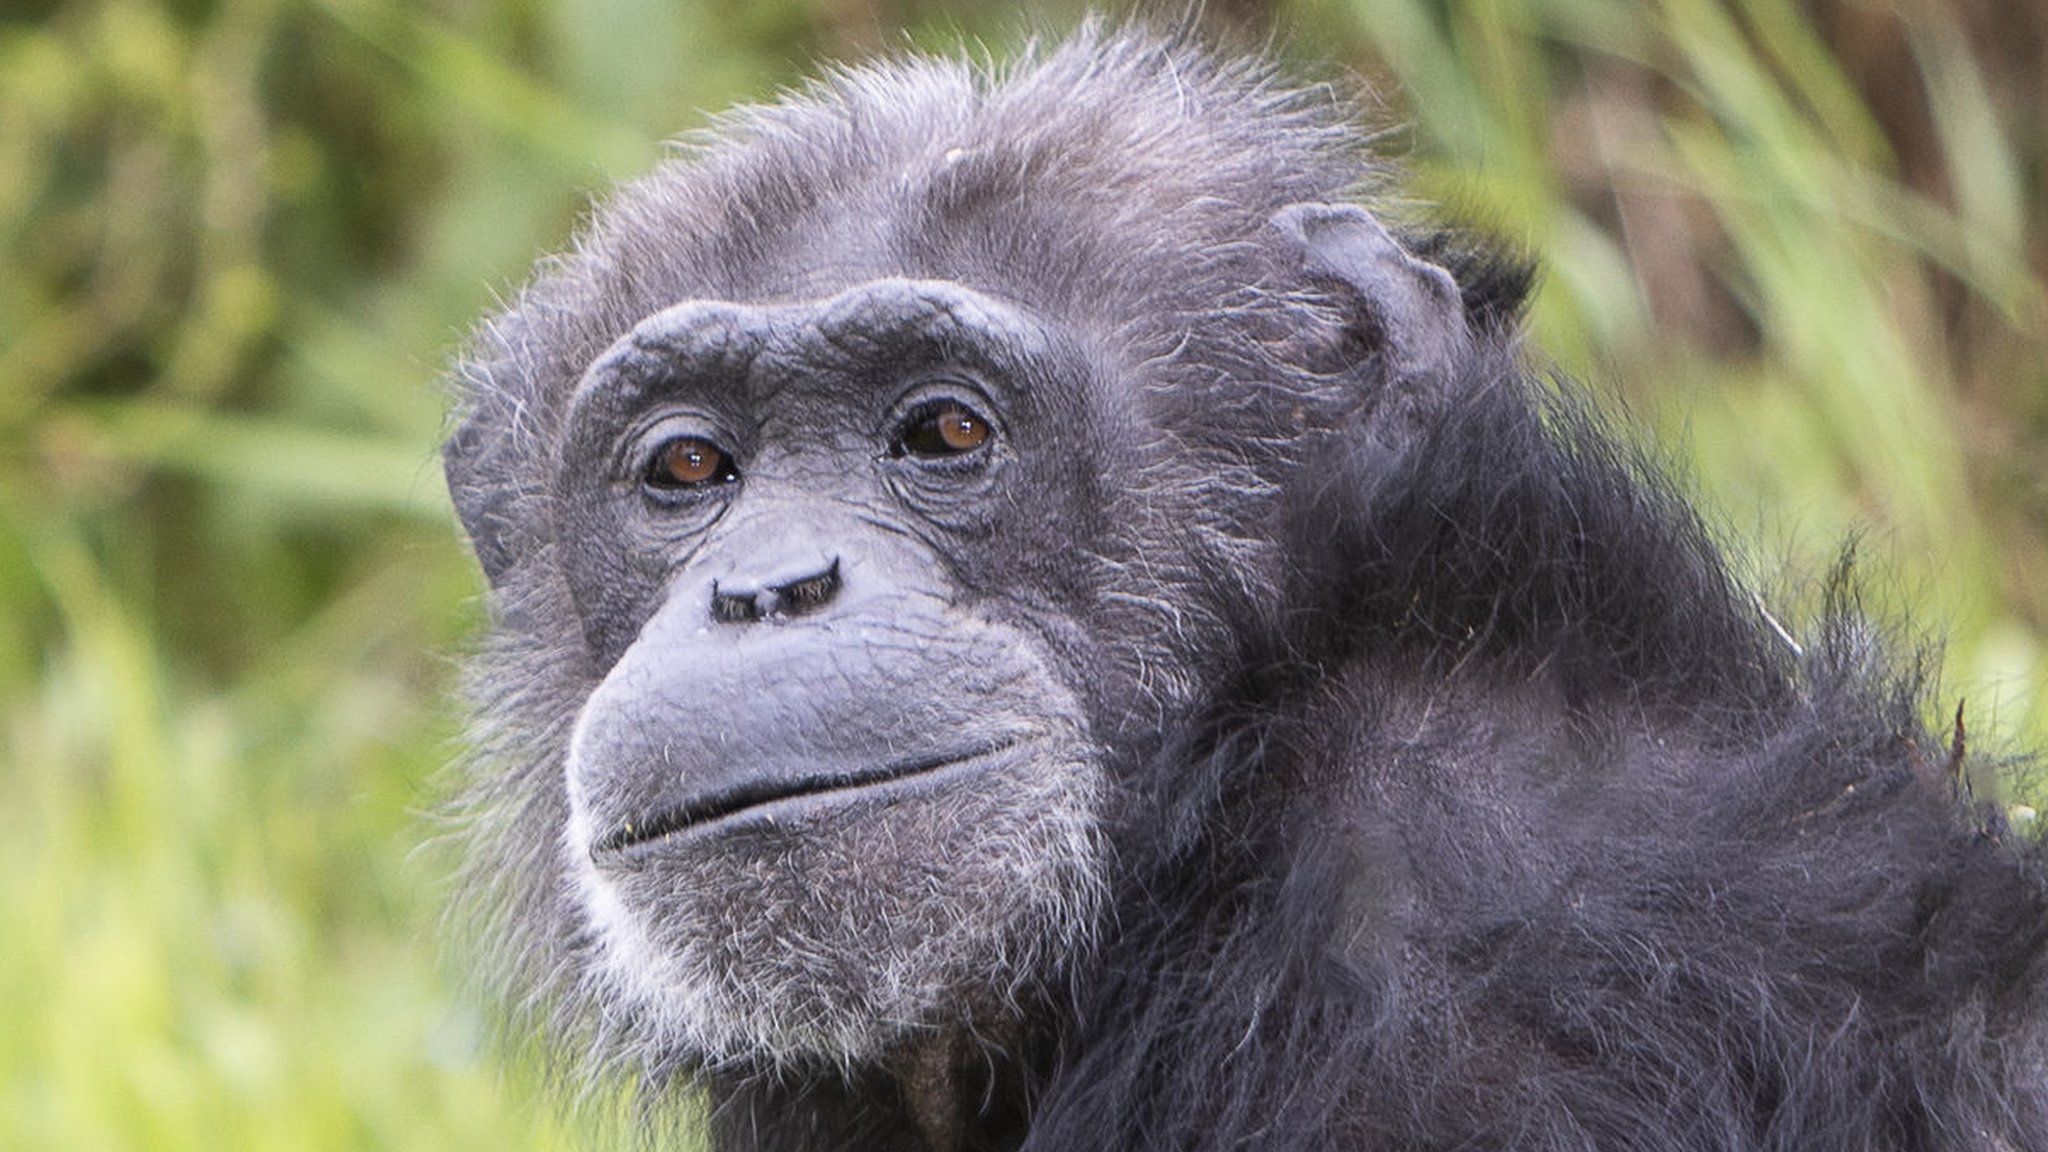 Koko the chimpanzee is smiling.